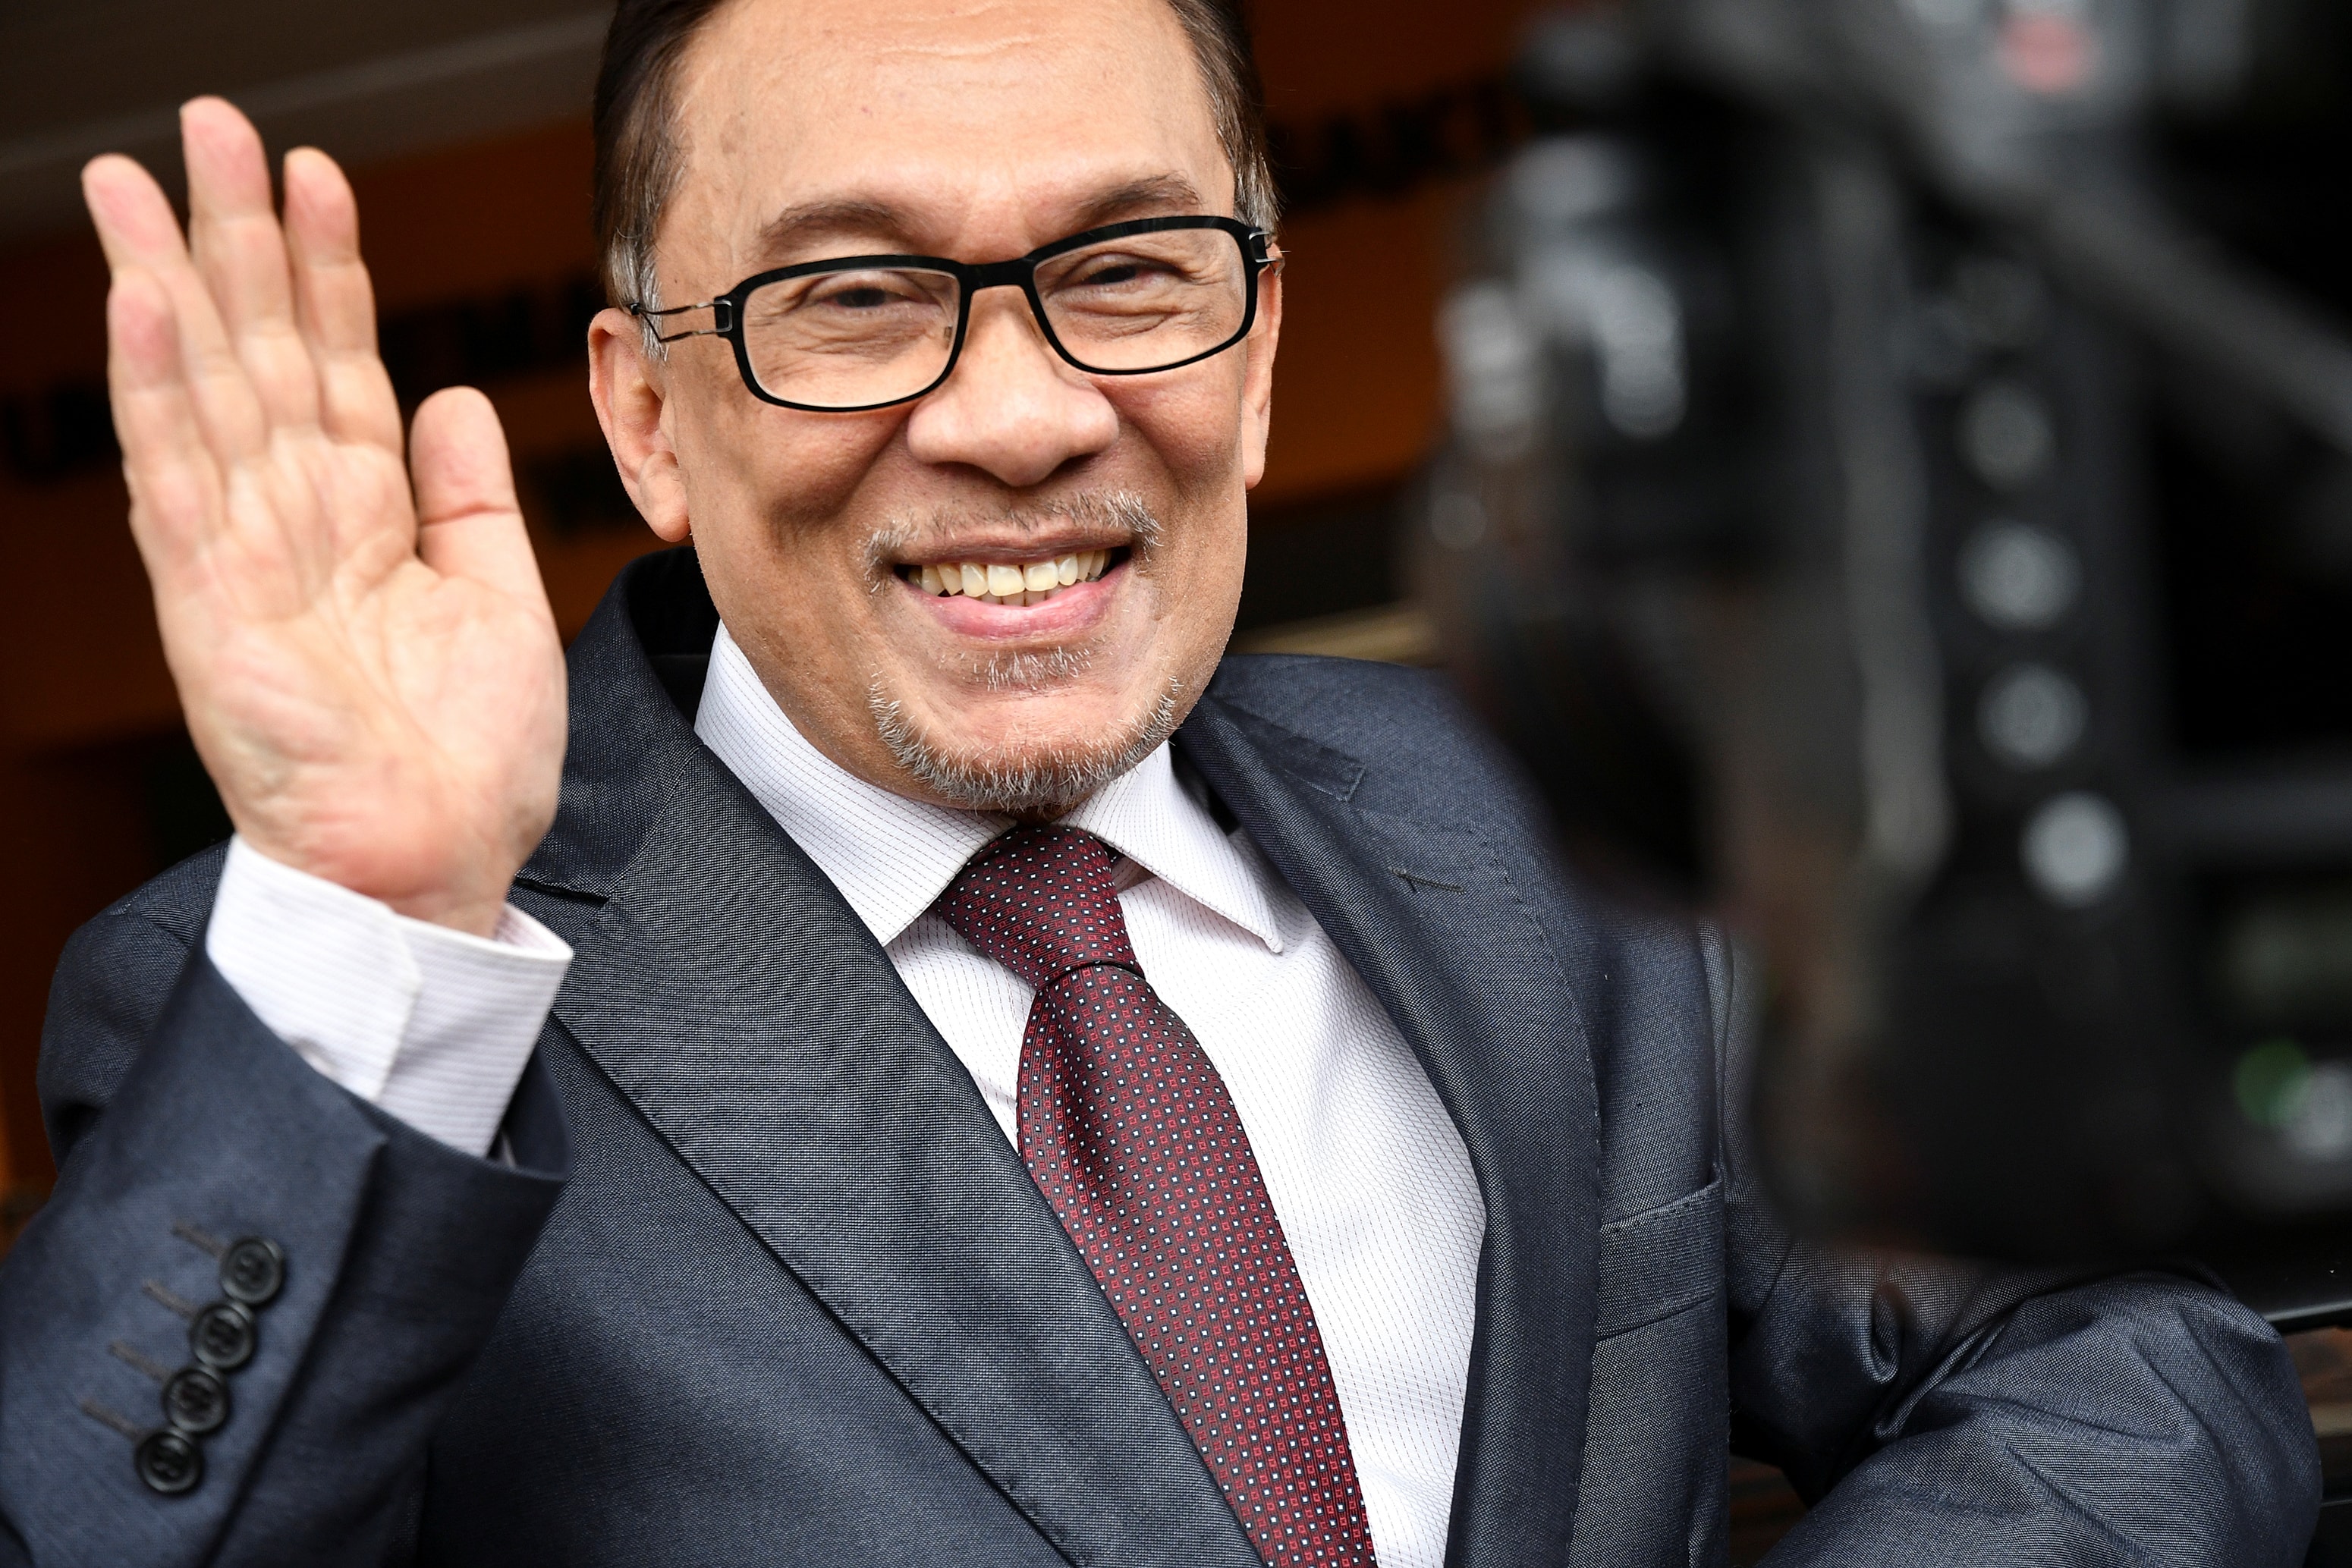 Jailed Malaysian leader Anwar Ibrahim walks free after royal pardon - TVTS